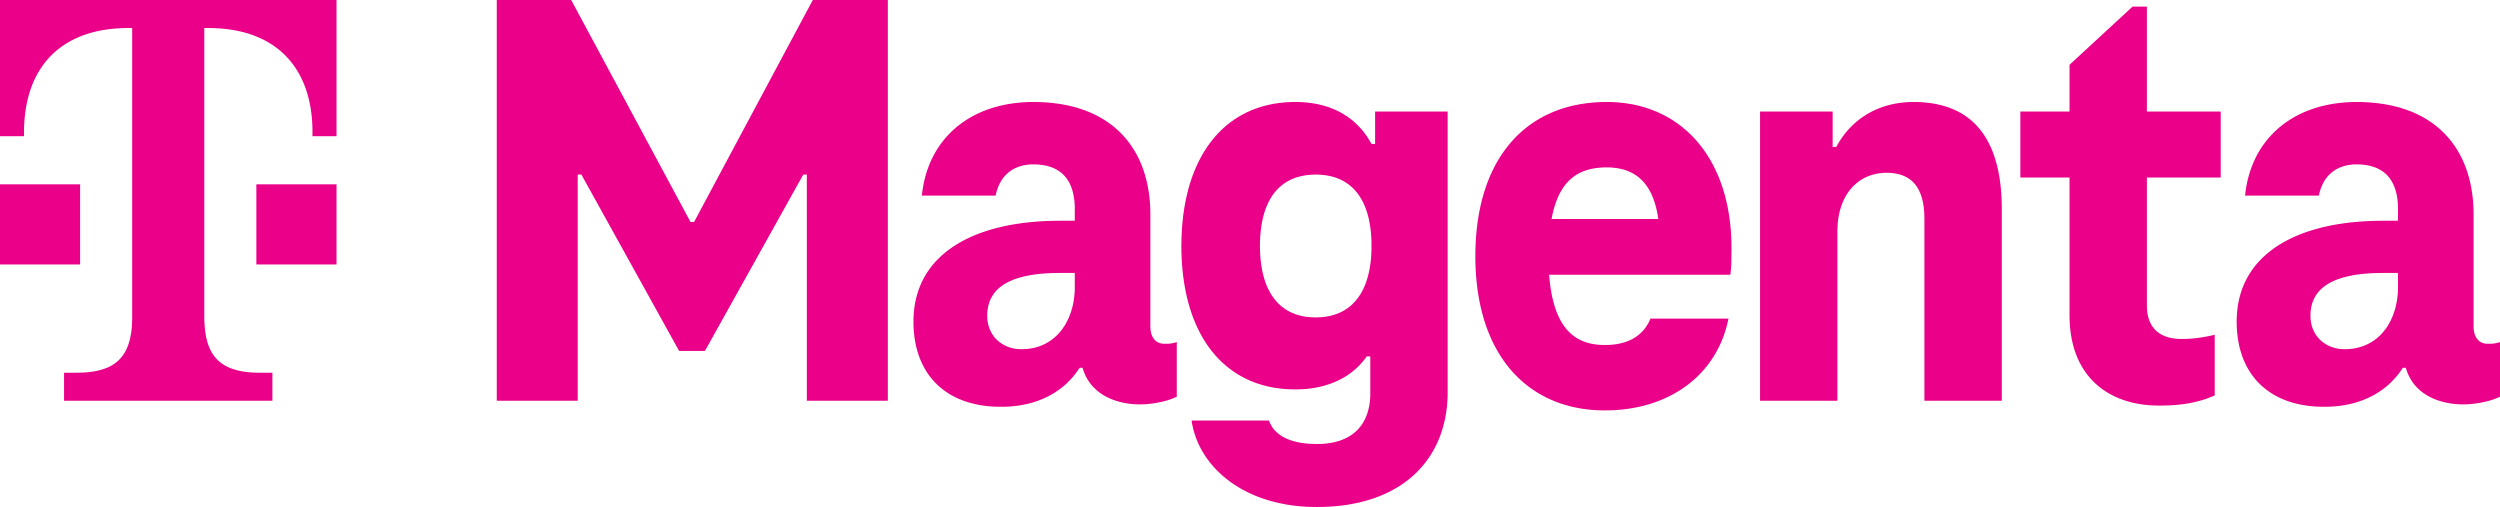 Logo Magenta